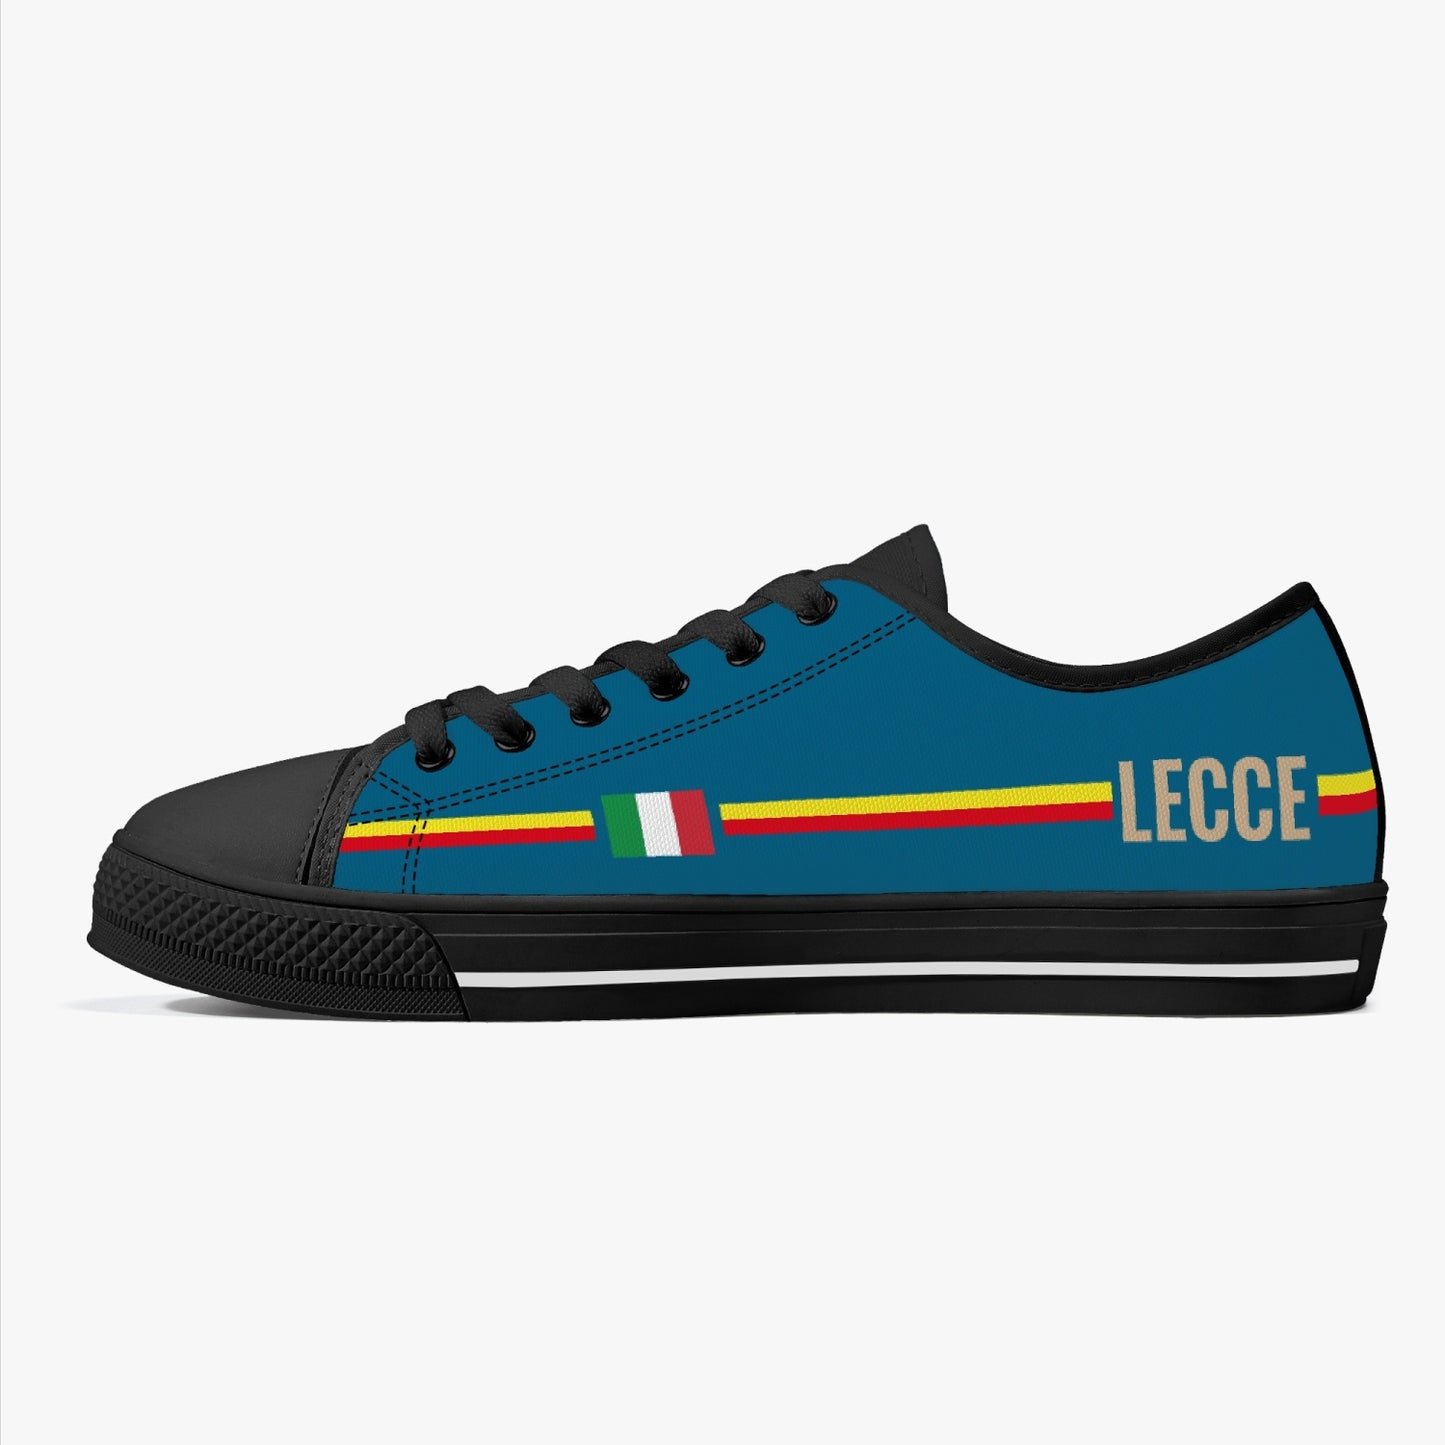 Low-Top Shoes - Lecce - women's